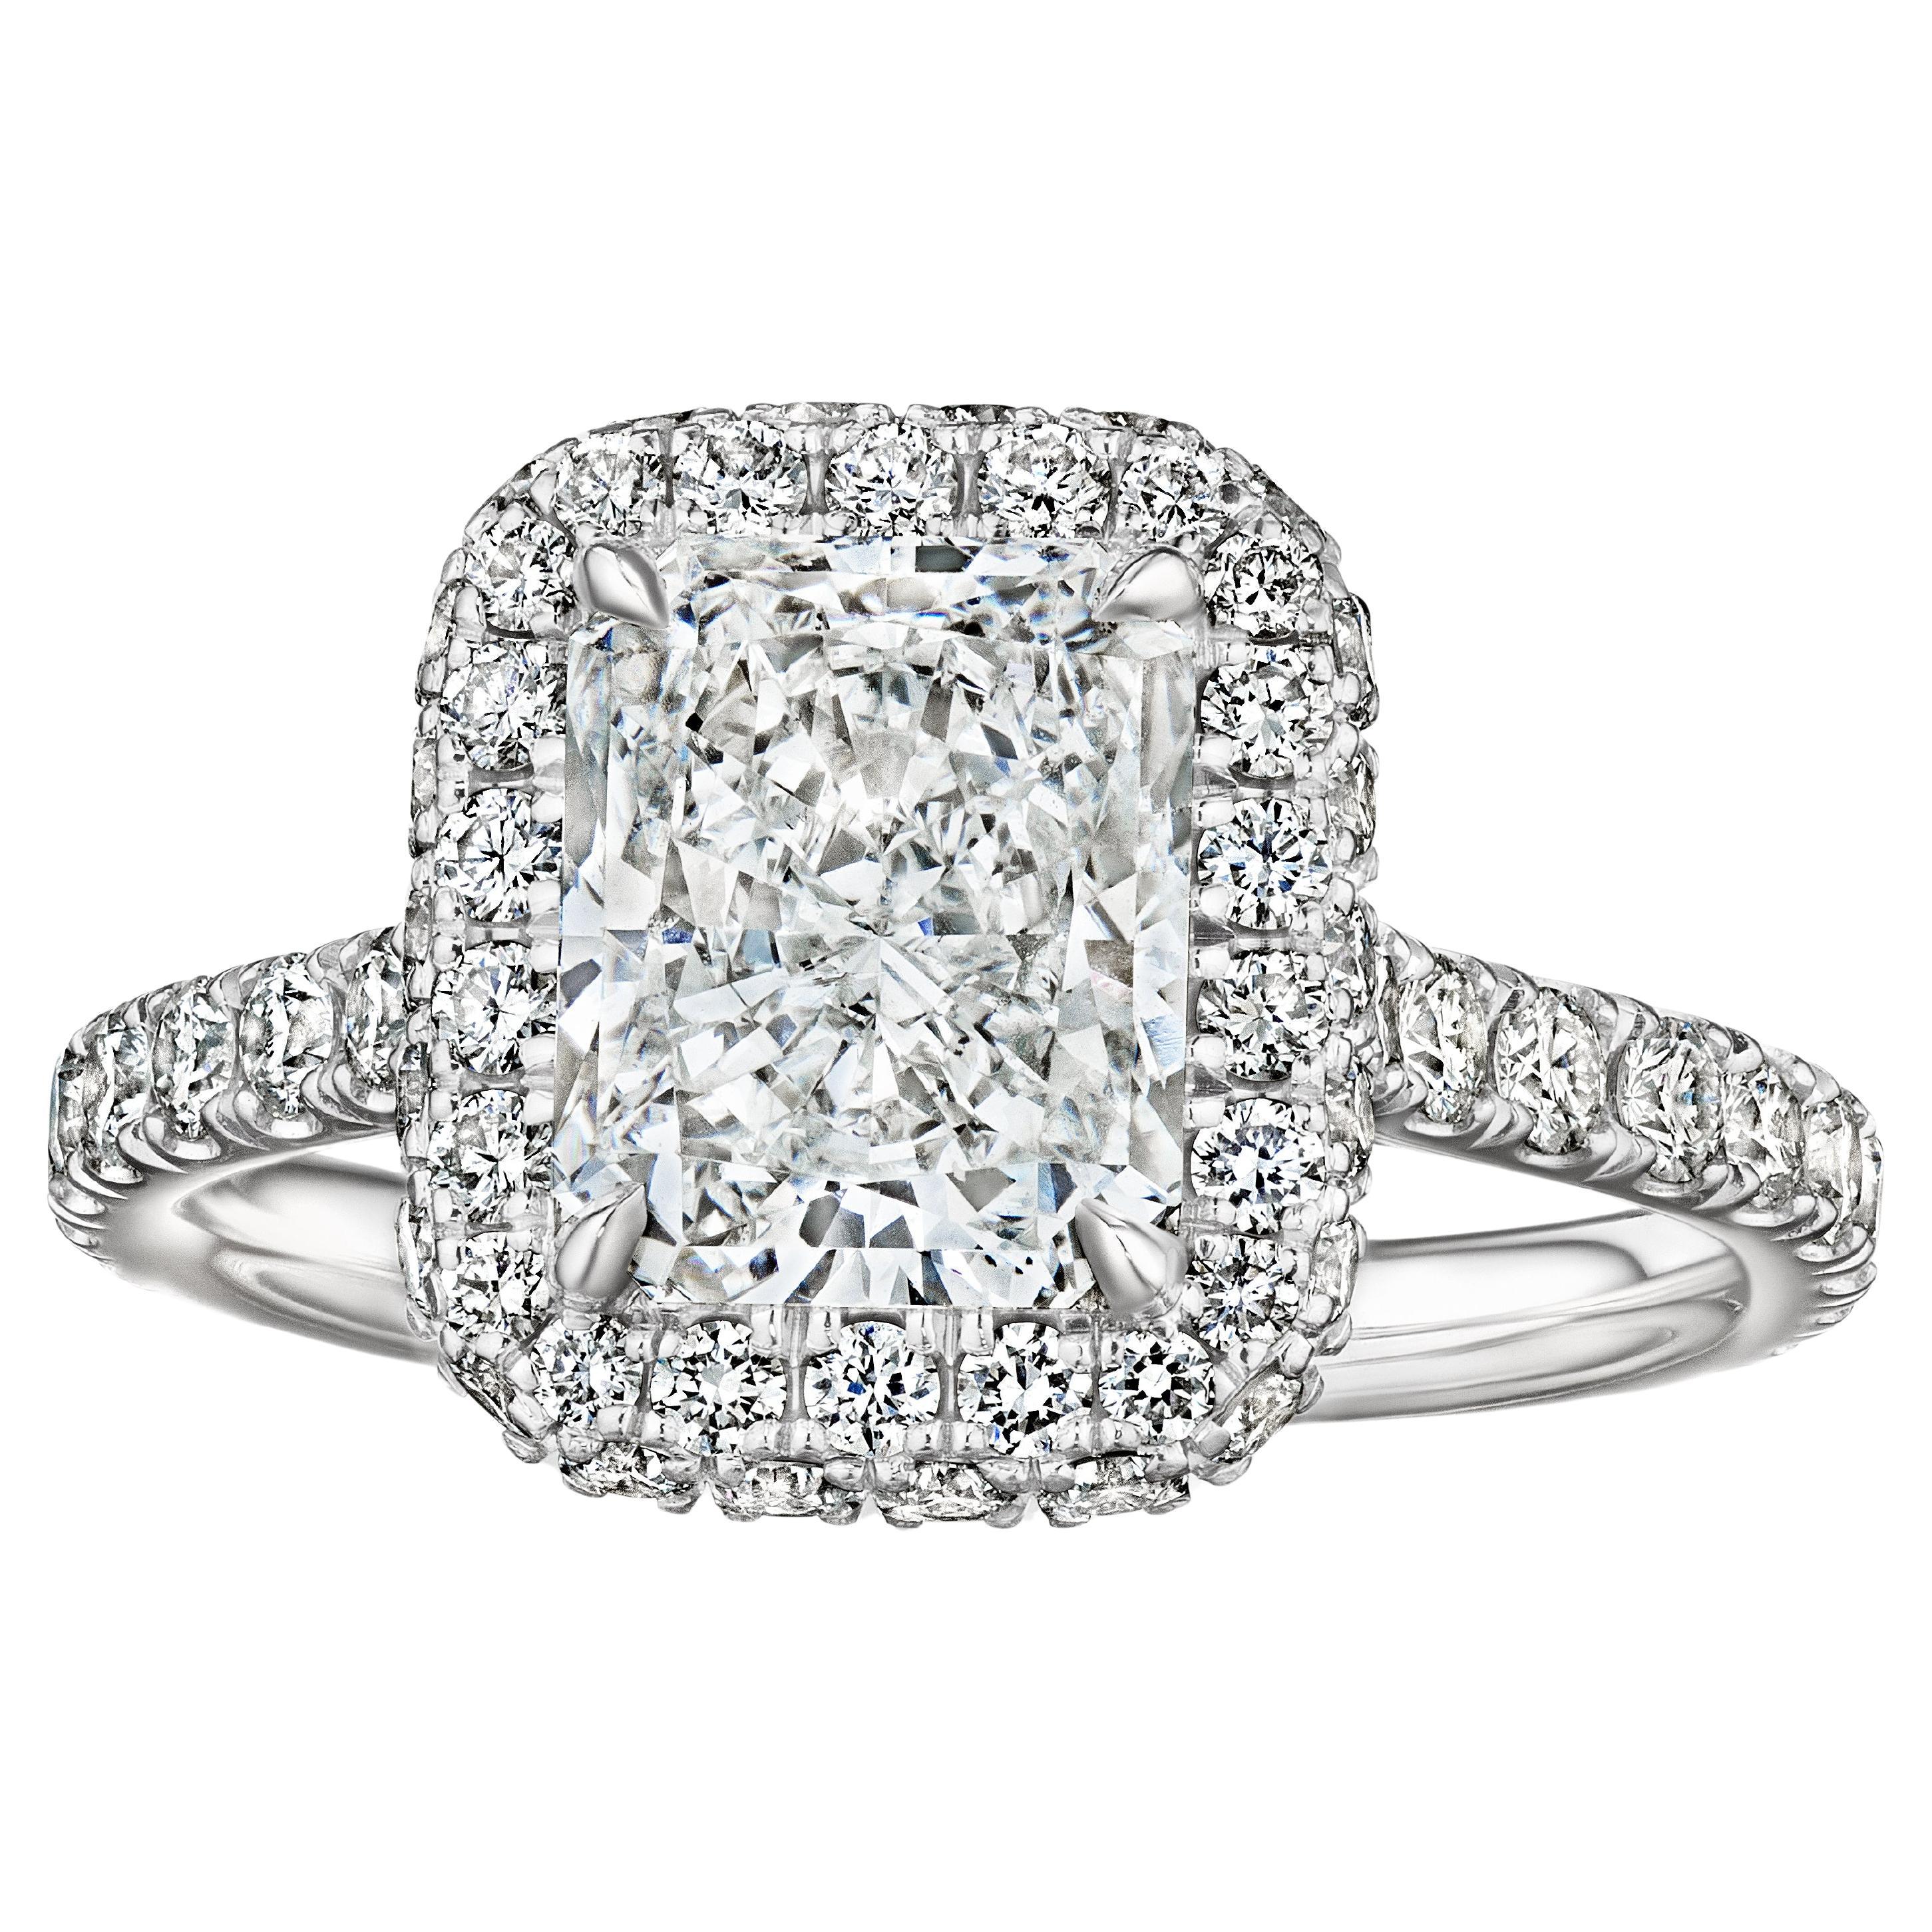 GIA Certified 3.18 Carat D VS2 Radiant Diamond Engagement Ring "Adeline" For Sale